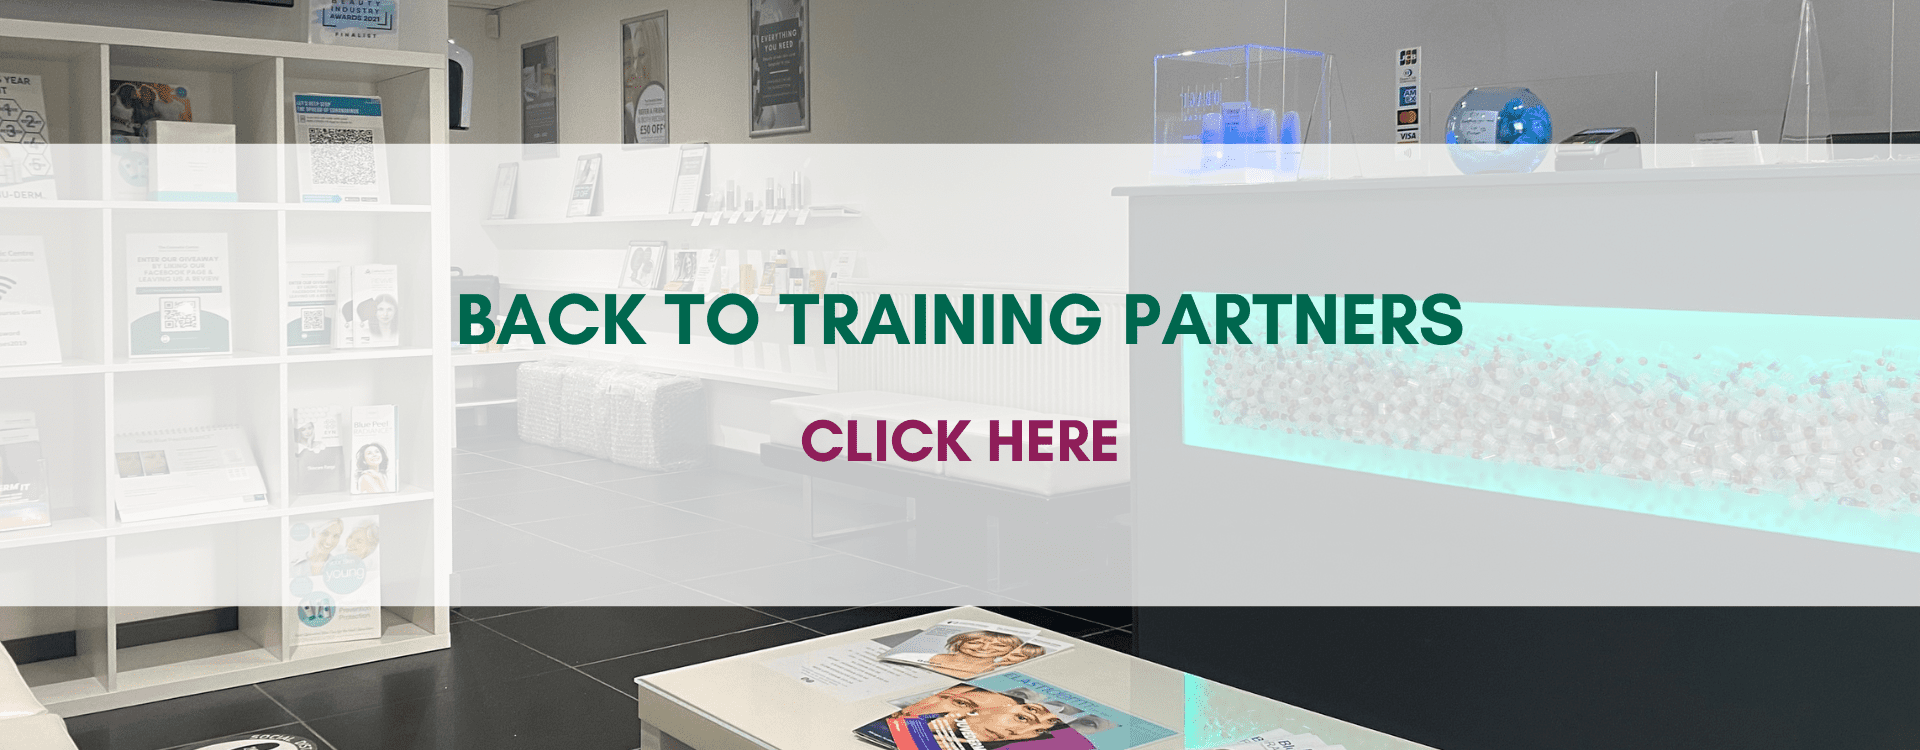 Training Partners - Mobile